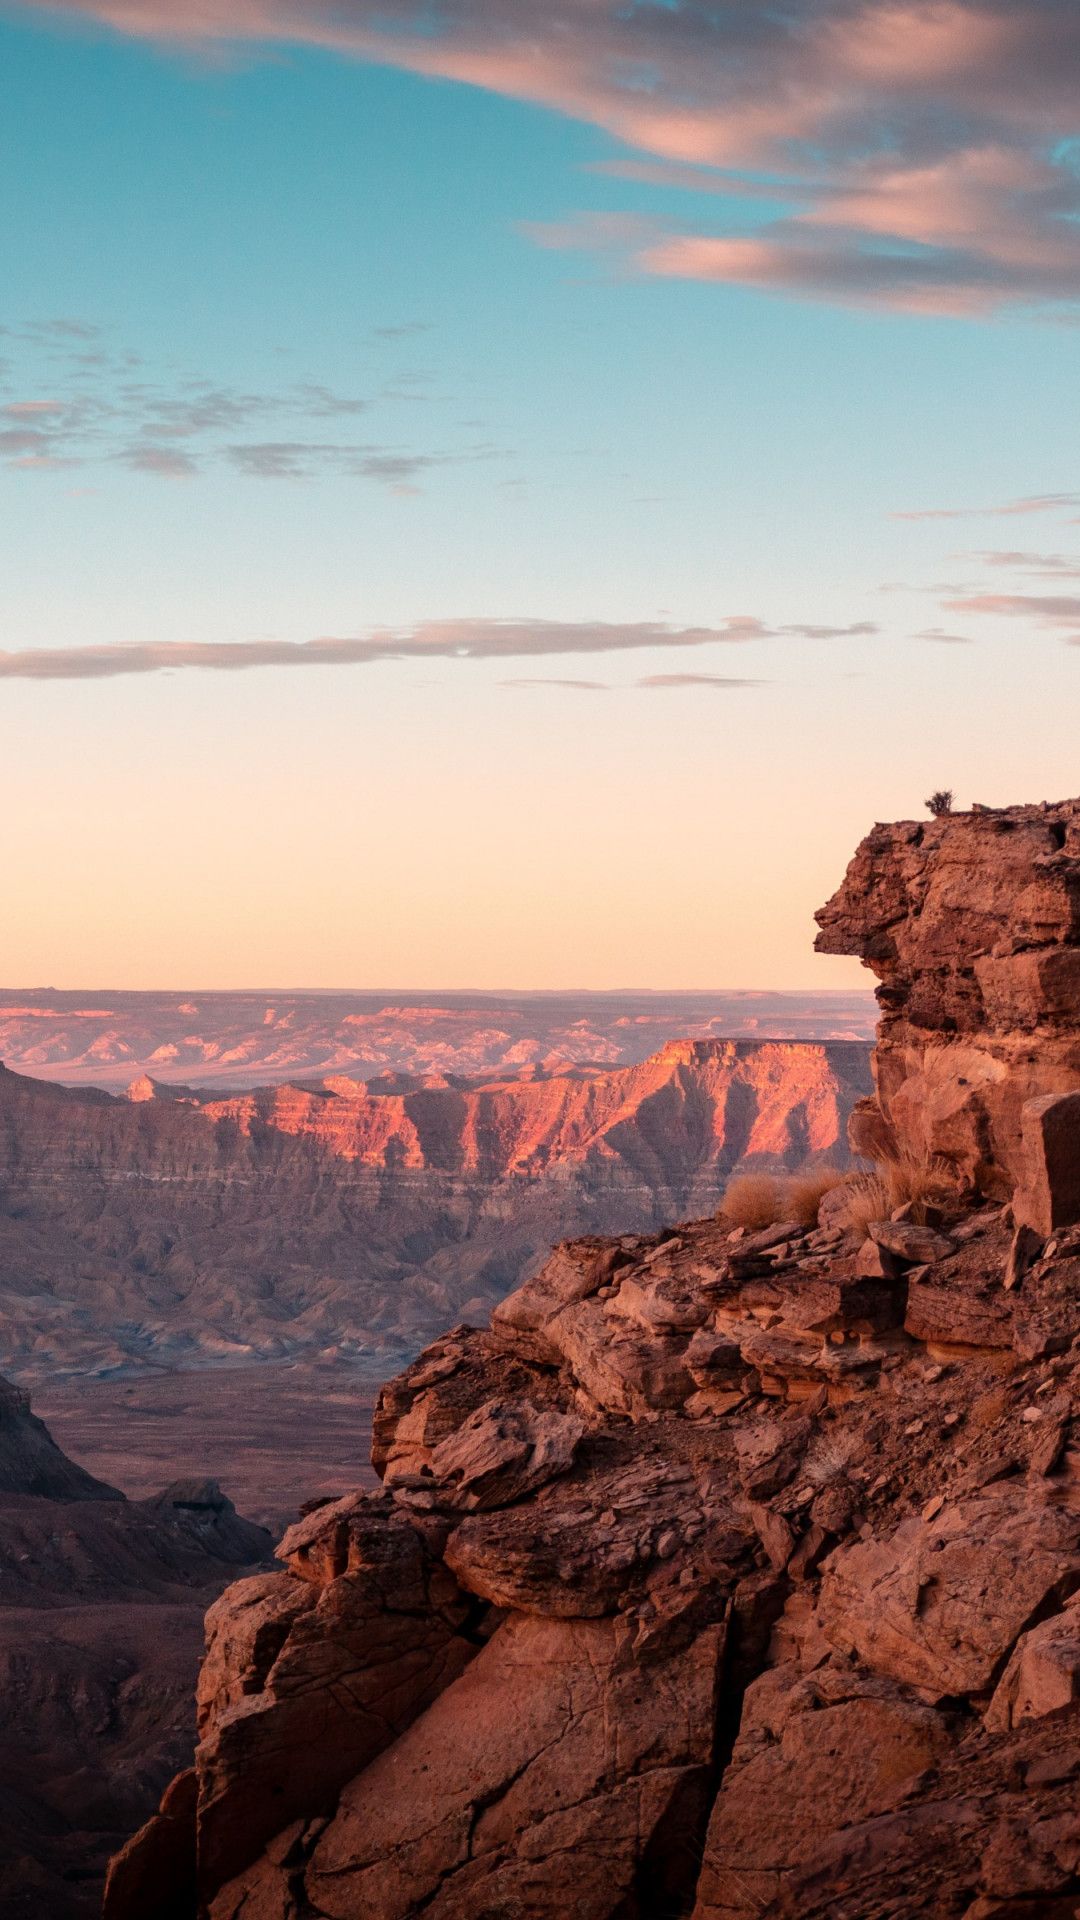 Download wallpaper: Canyon, sunset, desert, landscape, Bullfrog, USA 1080x1920